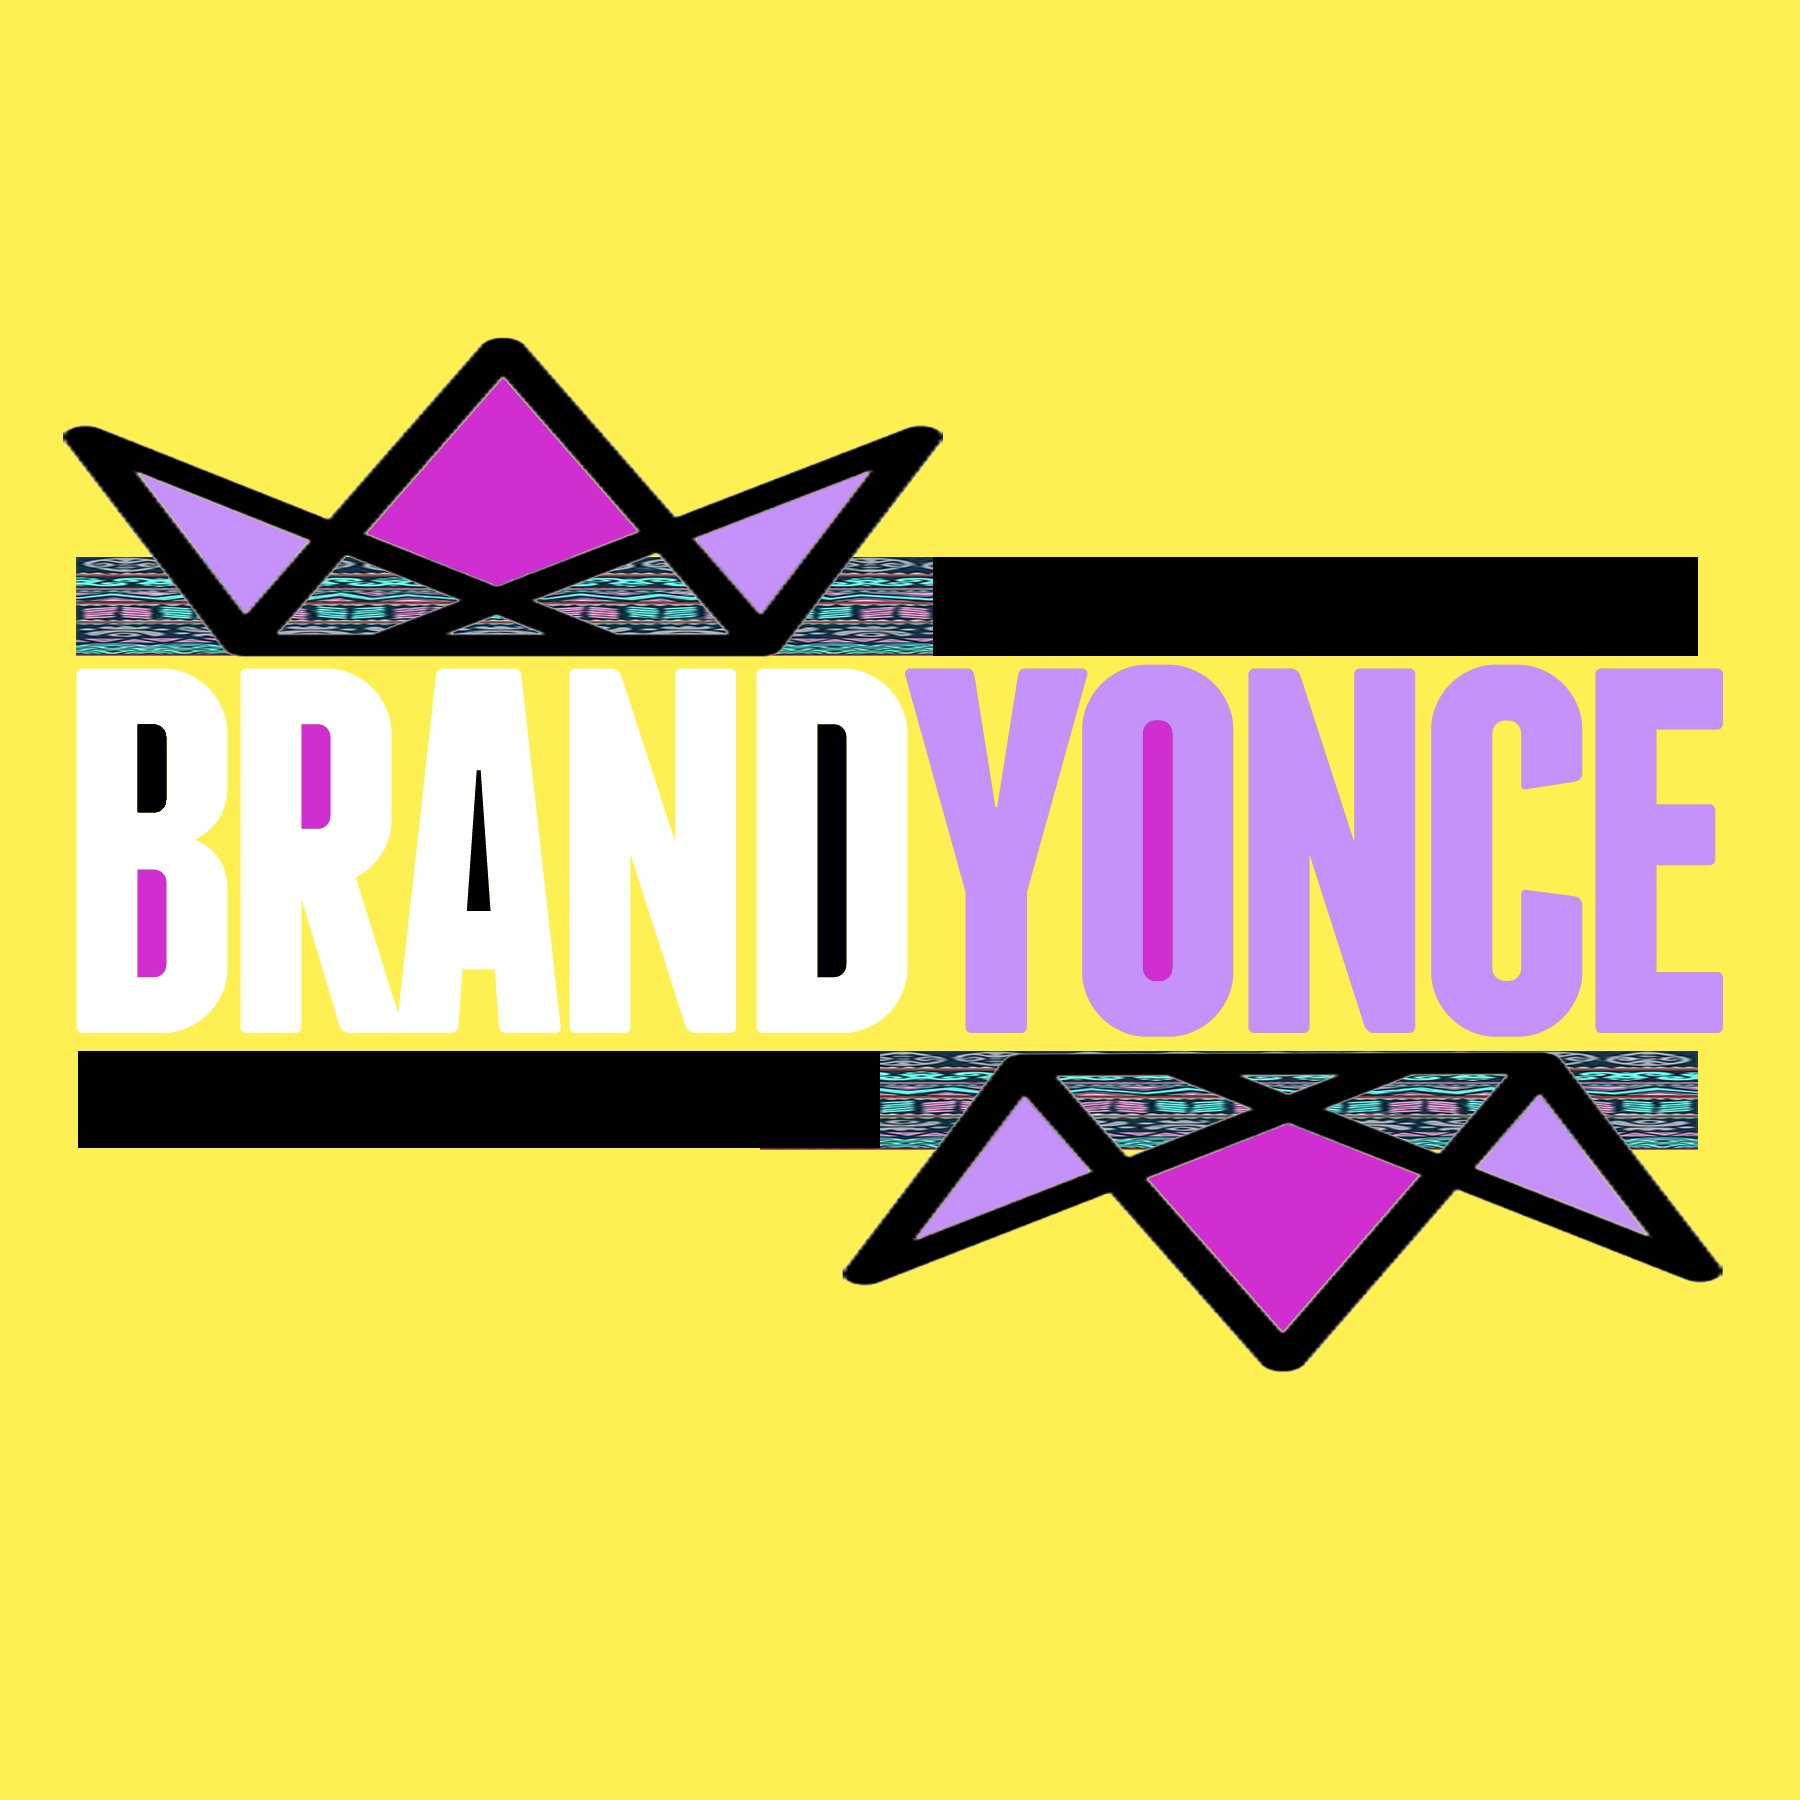 Brandyonce Online Business Academy